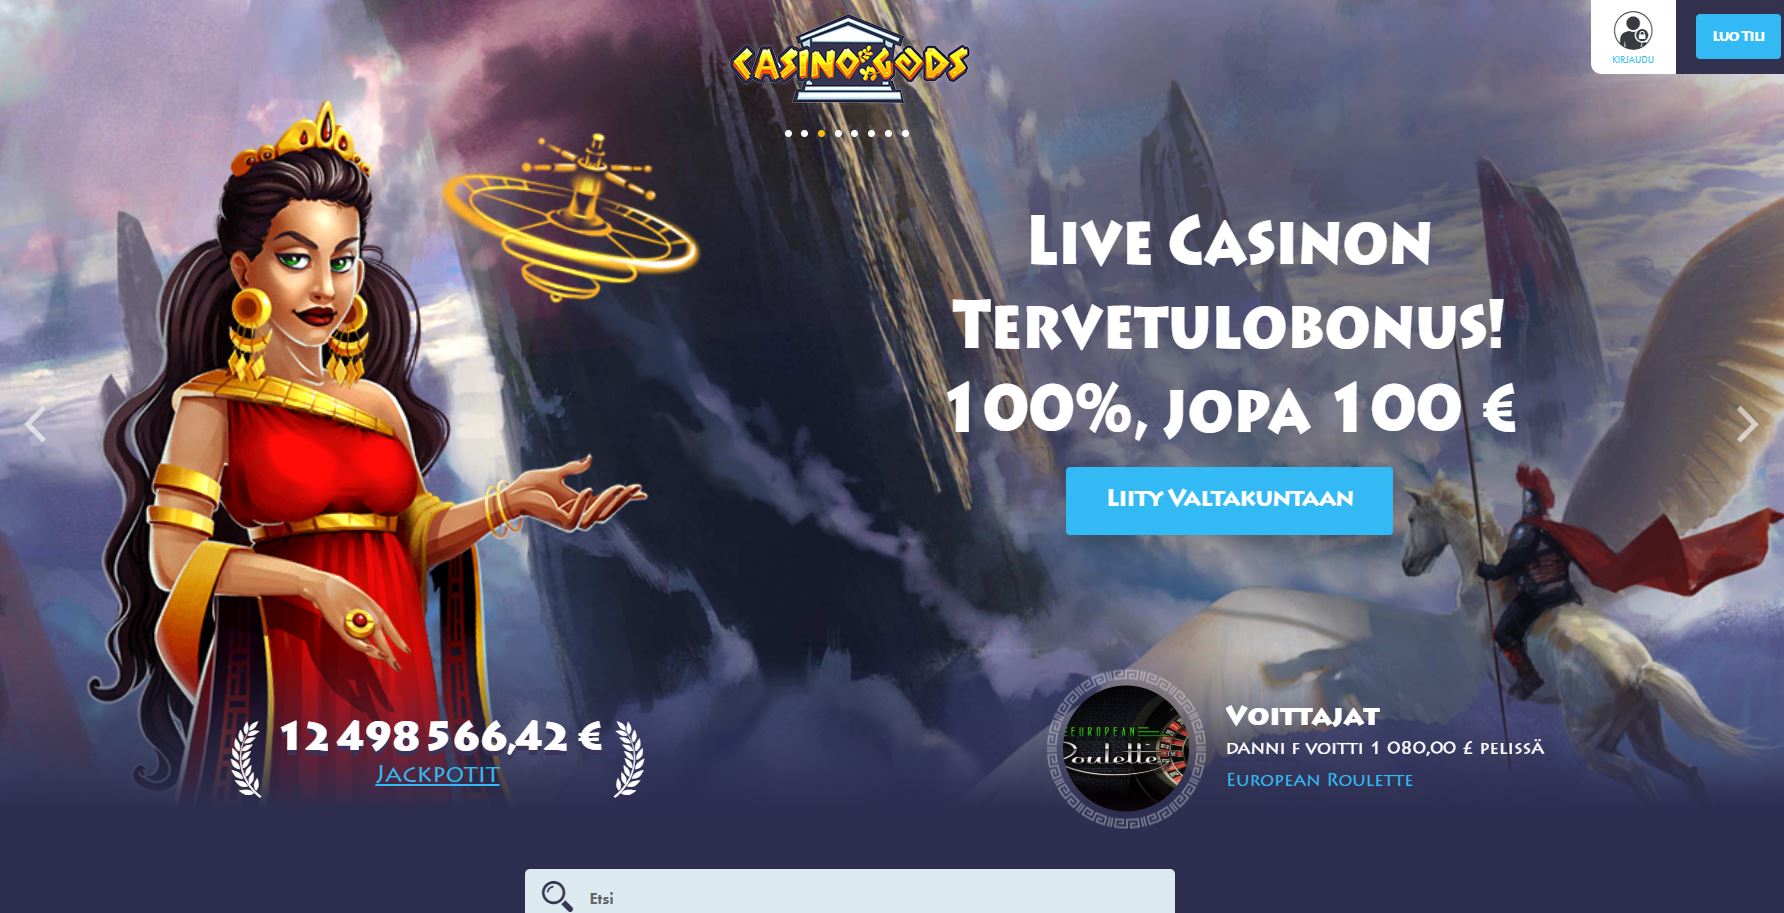 Casino Gods livekasino bonus